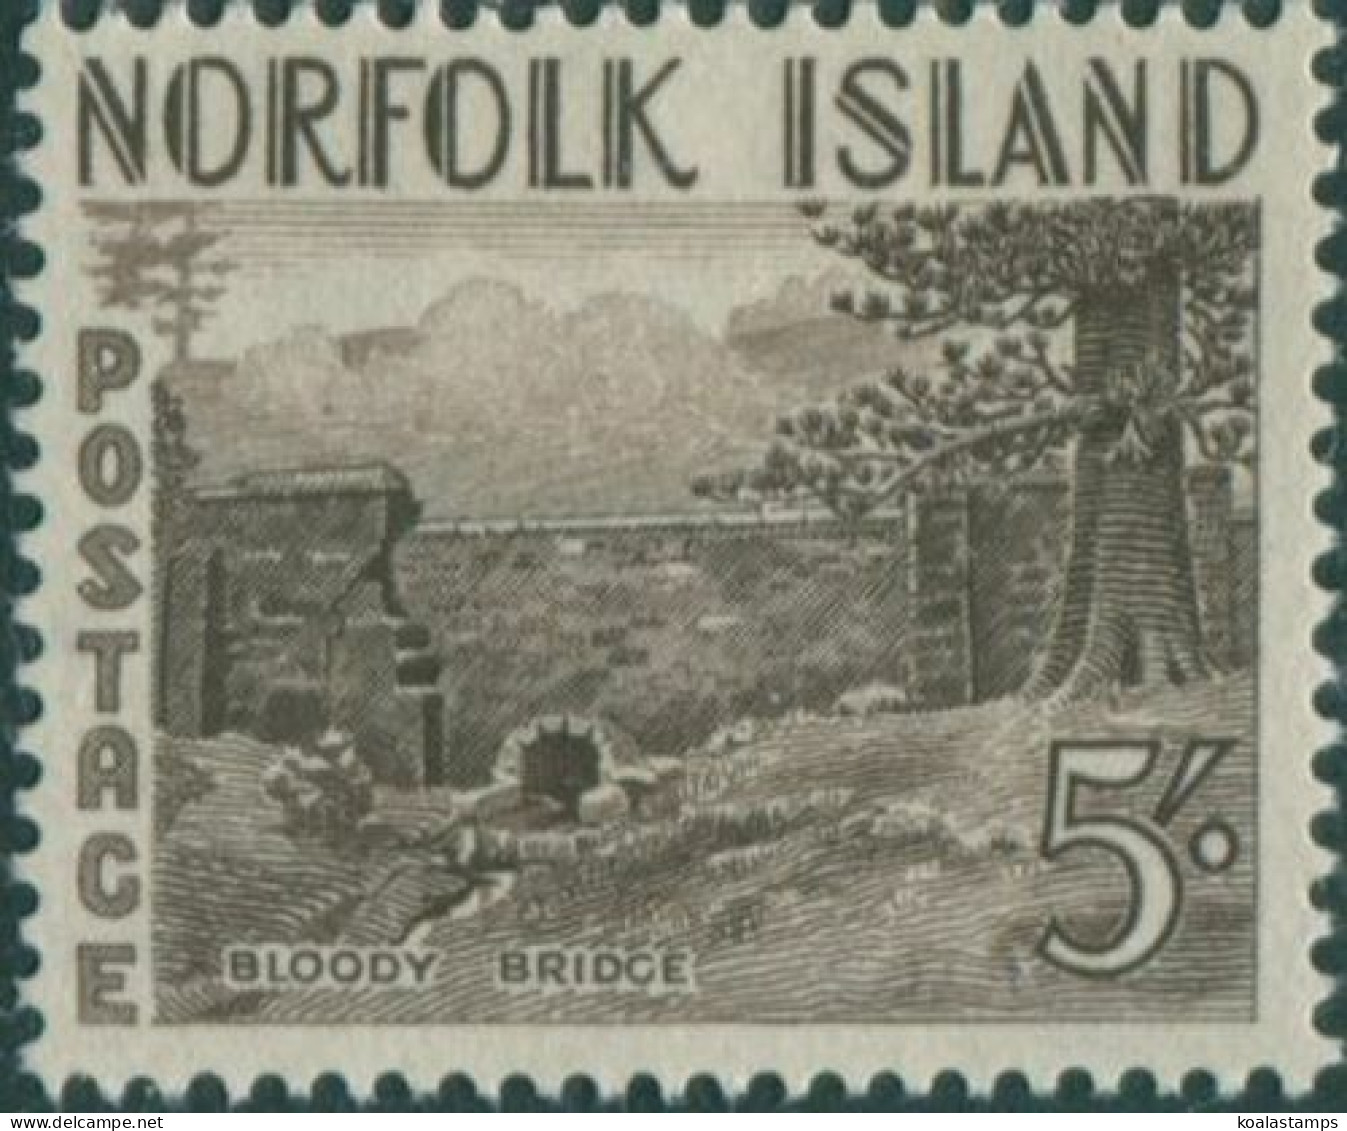 Norfolk Island 1953 SG18 5/- Brown Bloody Bridge MNH - Isla Norfolk